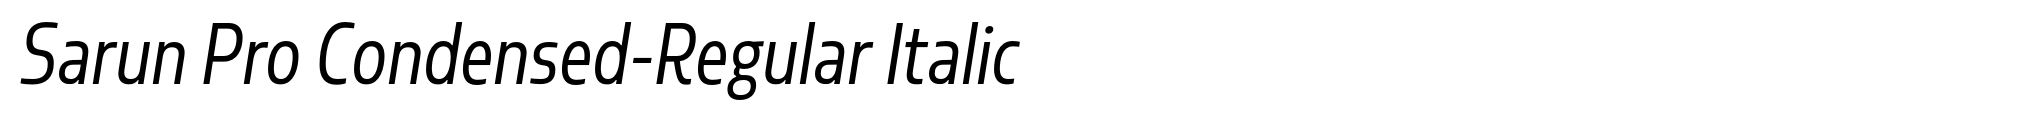 Sarun Pro Condensed-Regular Italic image